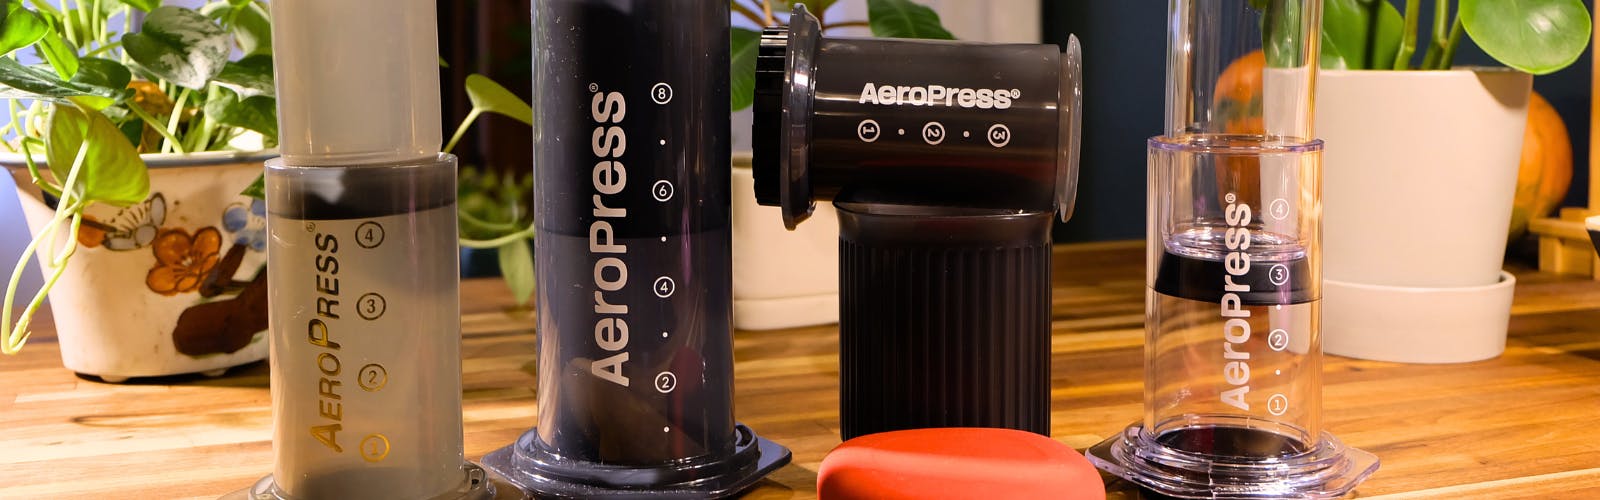 AeroPress Go Travel Coffee Maker - The Black Dog Coffee Company